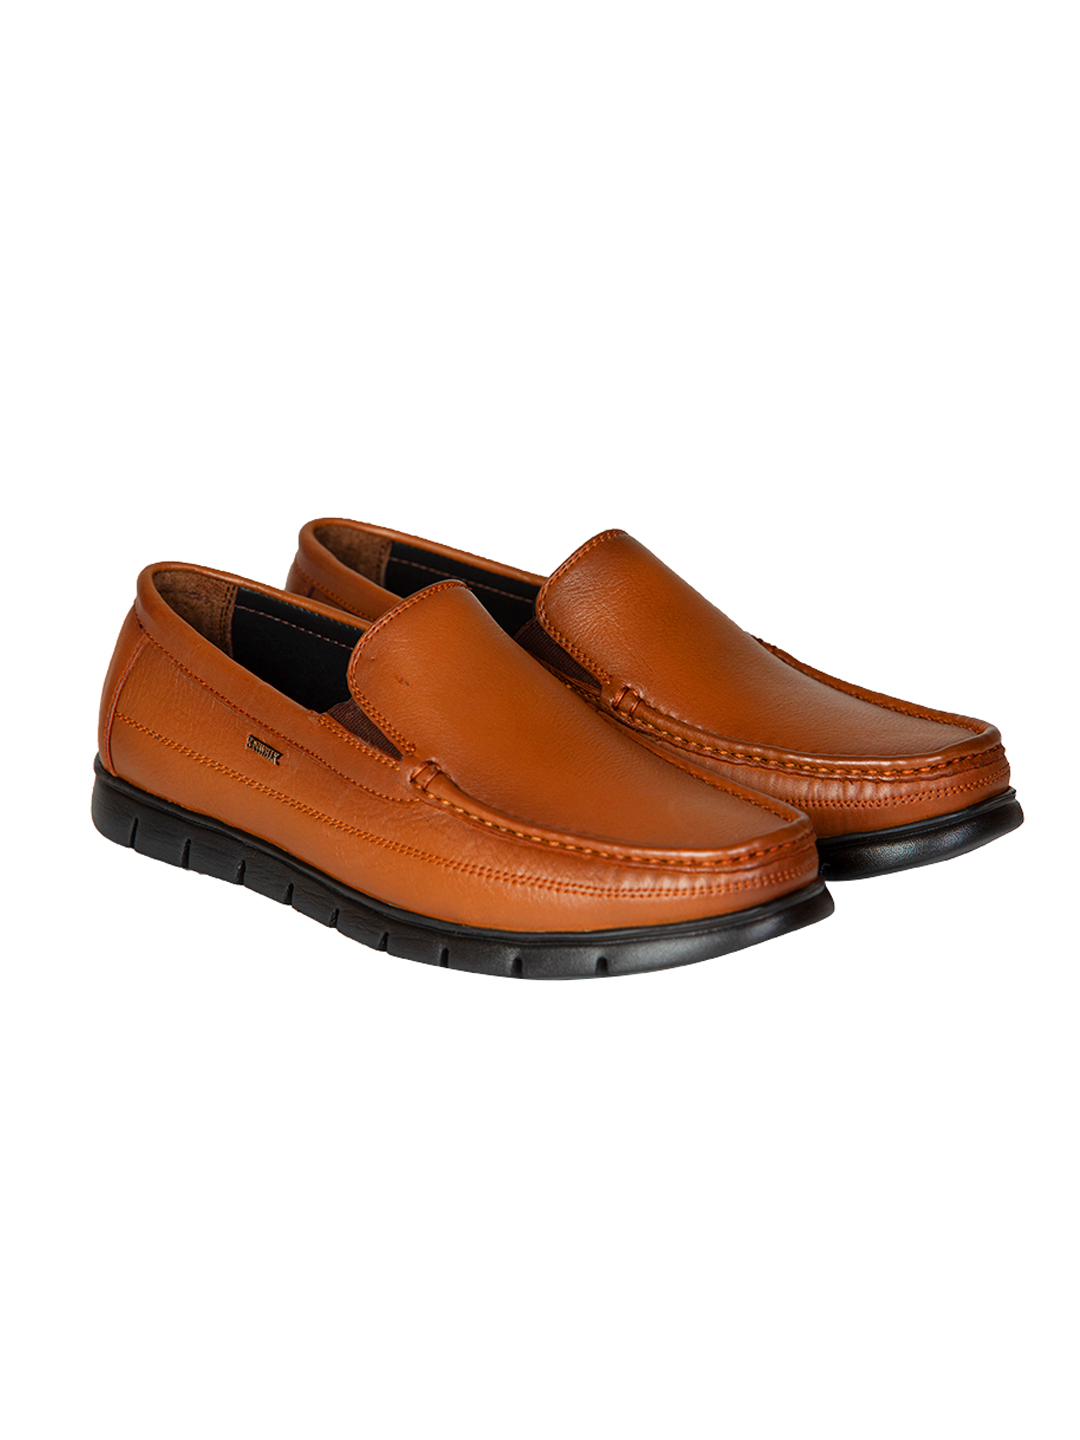 Buy Von Wellx Germany Comfort Tan Zion Shoes Online in Visakhapatnam